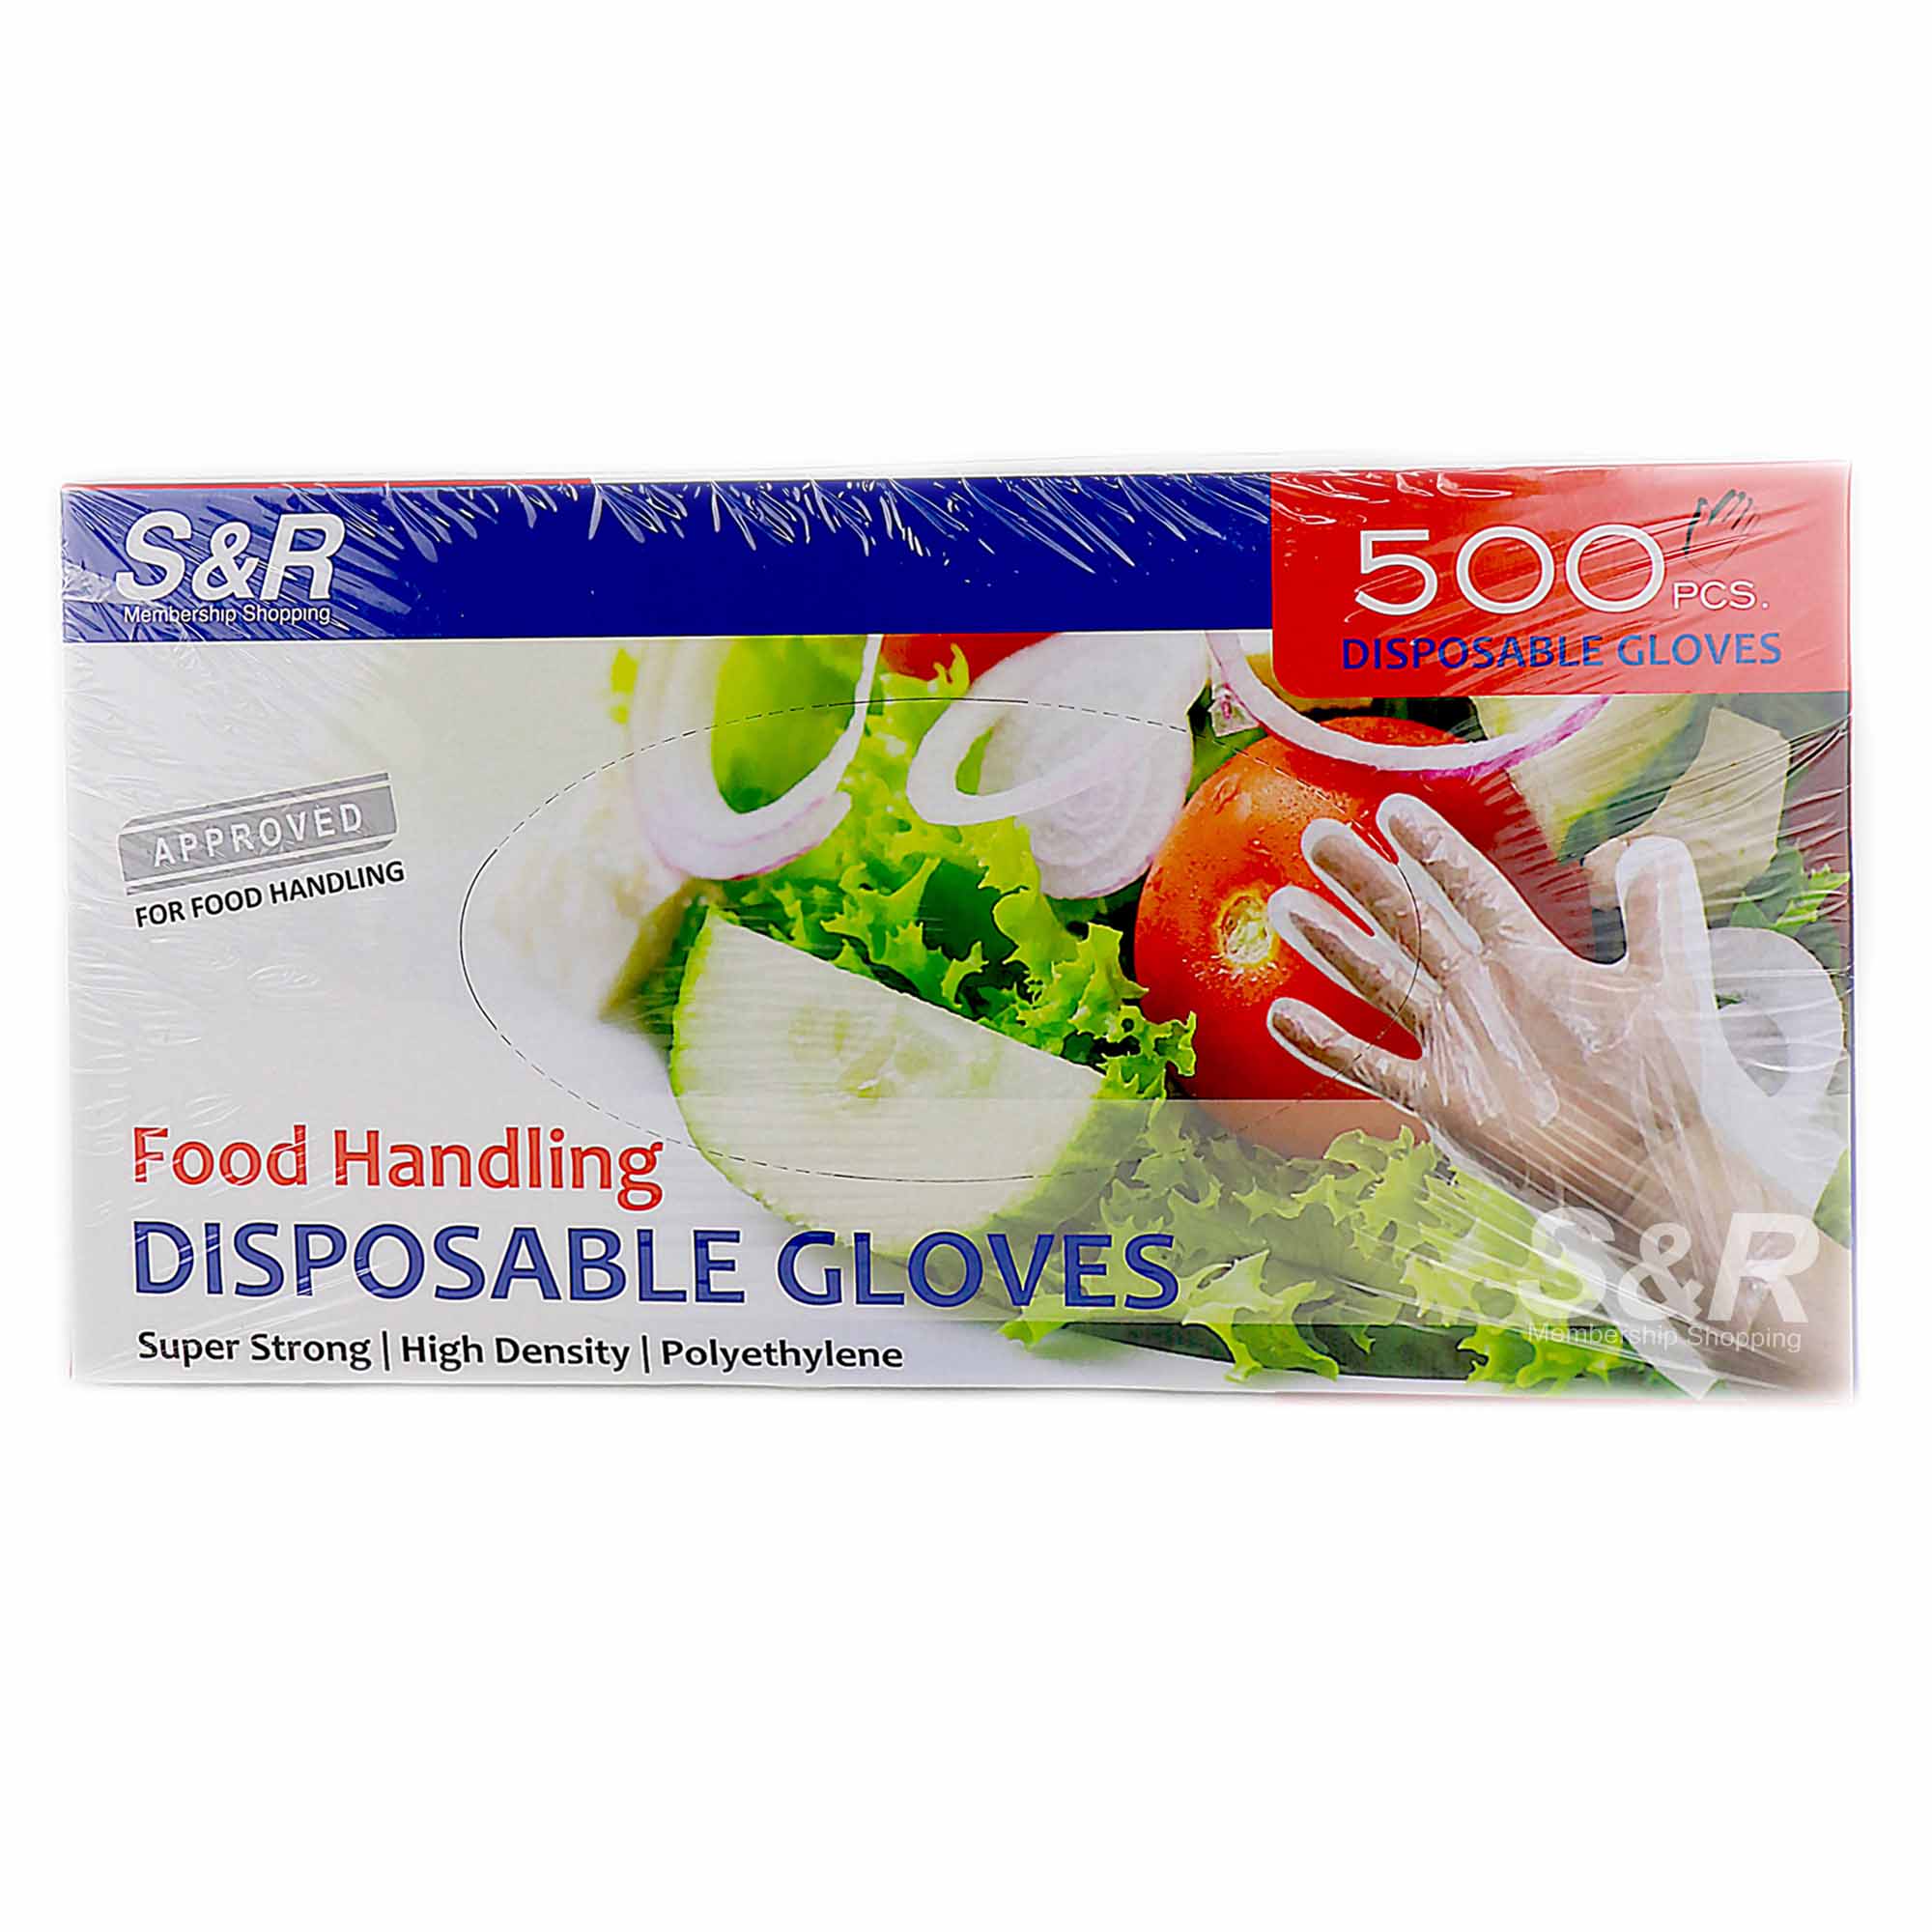 S&R Disposable Food Handling Gloves 500pcs